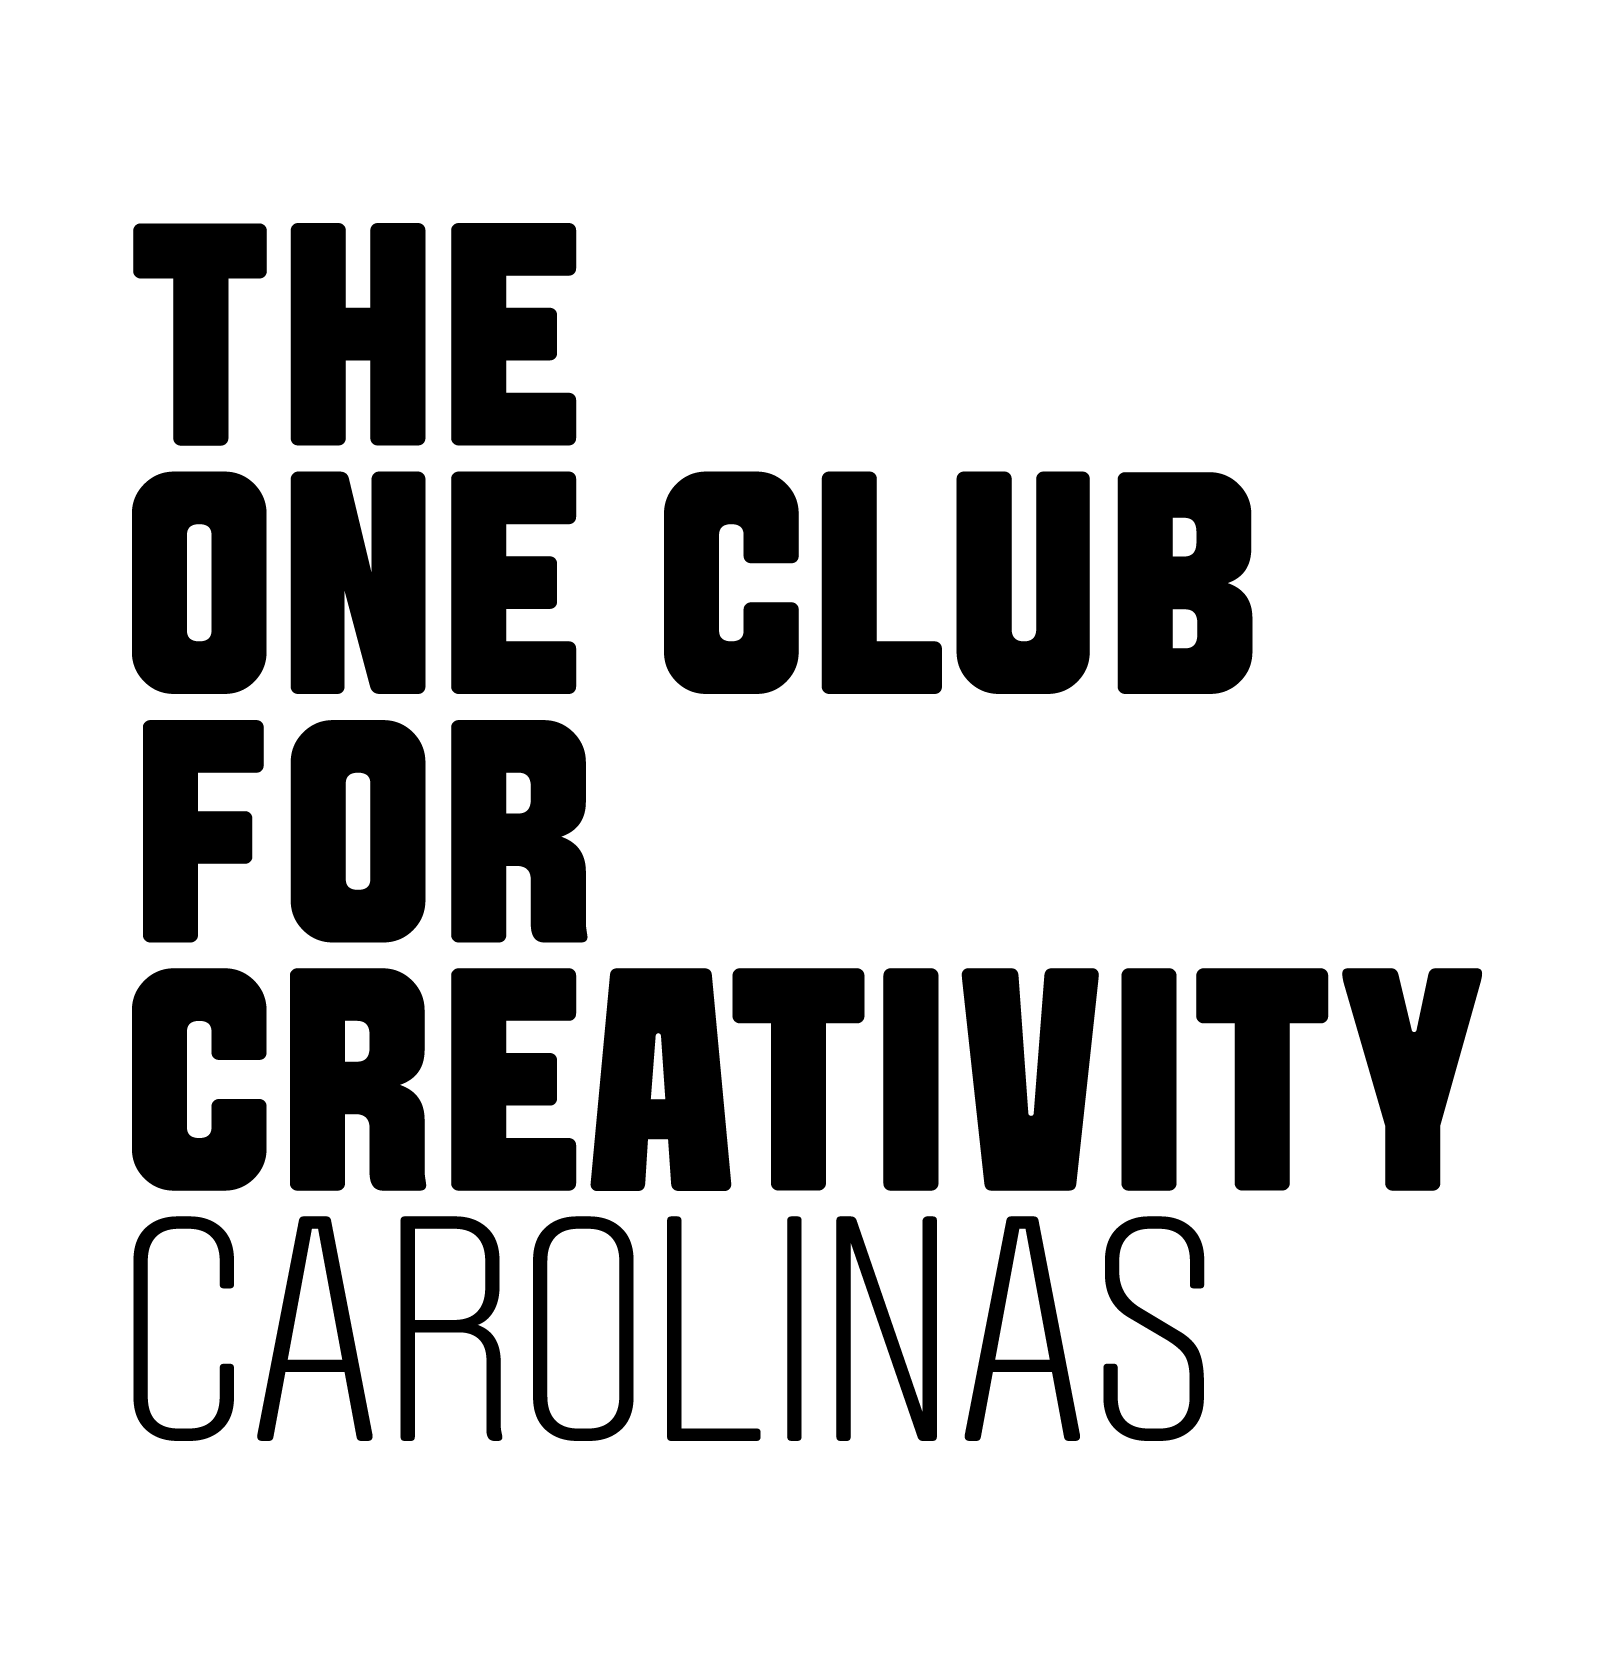 OneClub-Chapter_Carolinas-logo-black.png